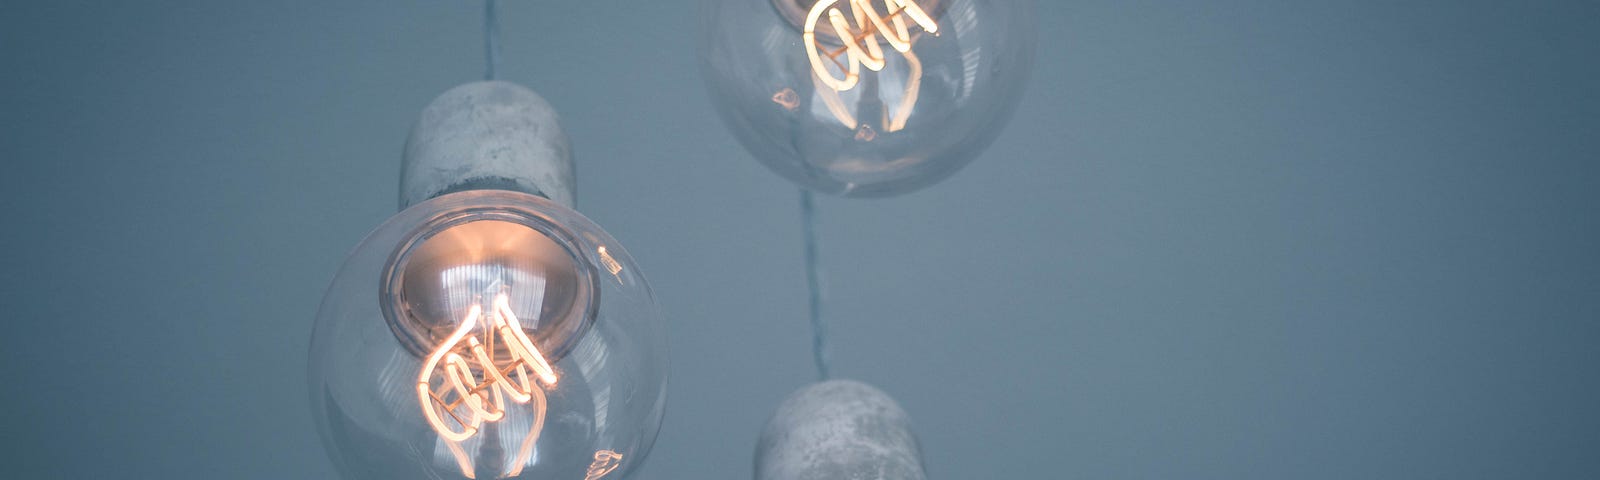 lightbulbs representing content strategy ideas